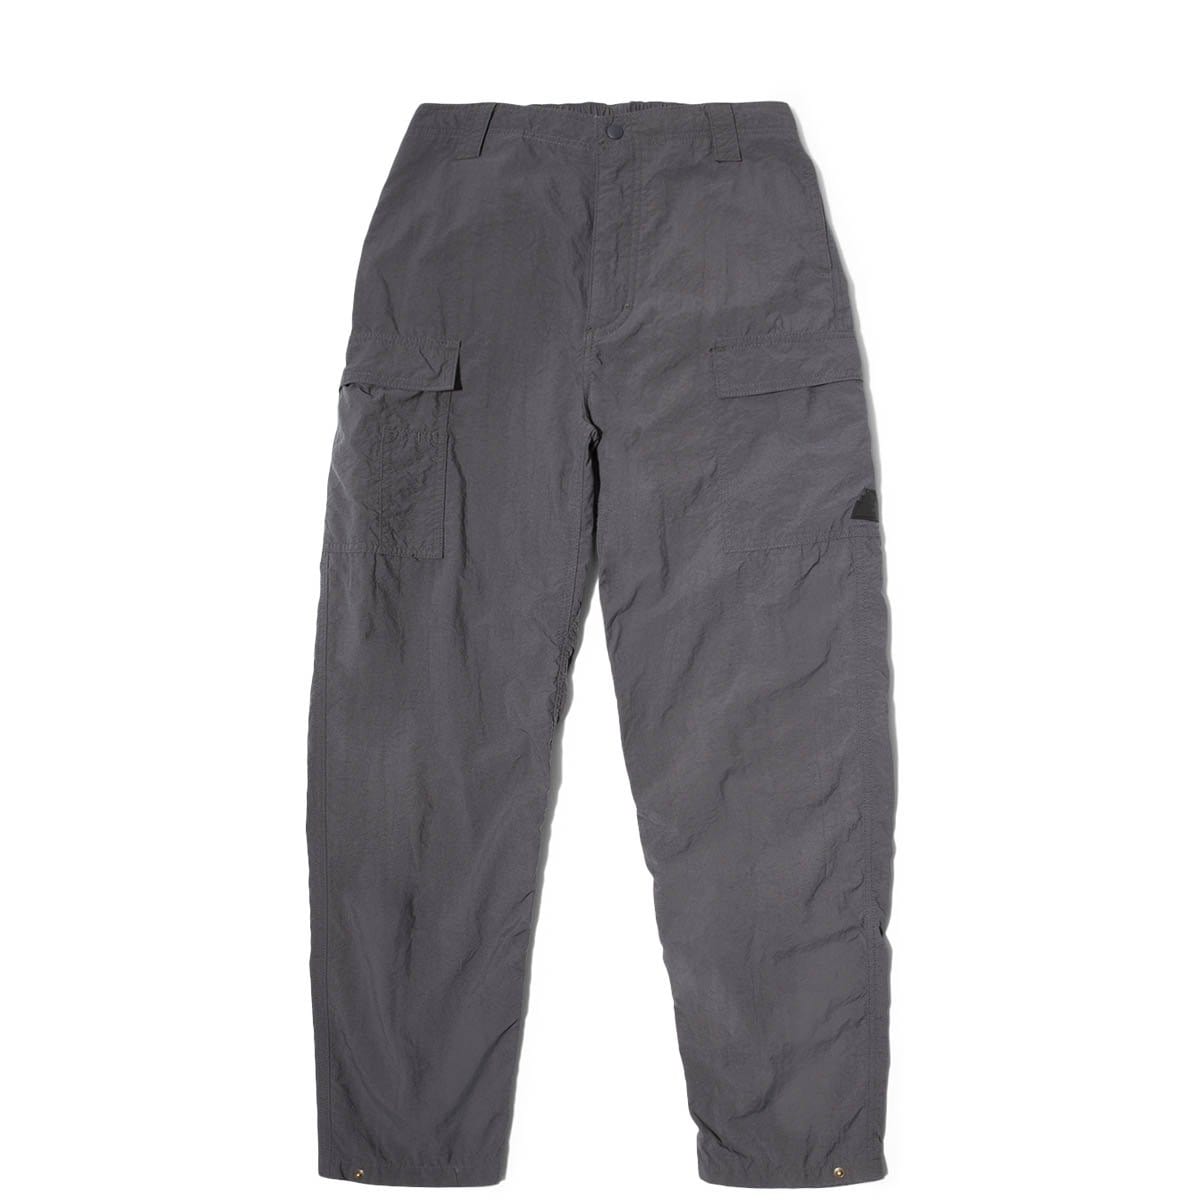 Cav Empt Nylon Cargo Pants Charcoal